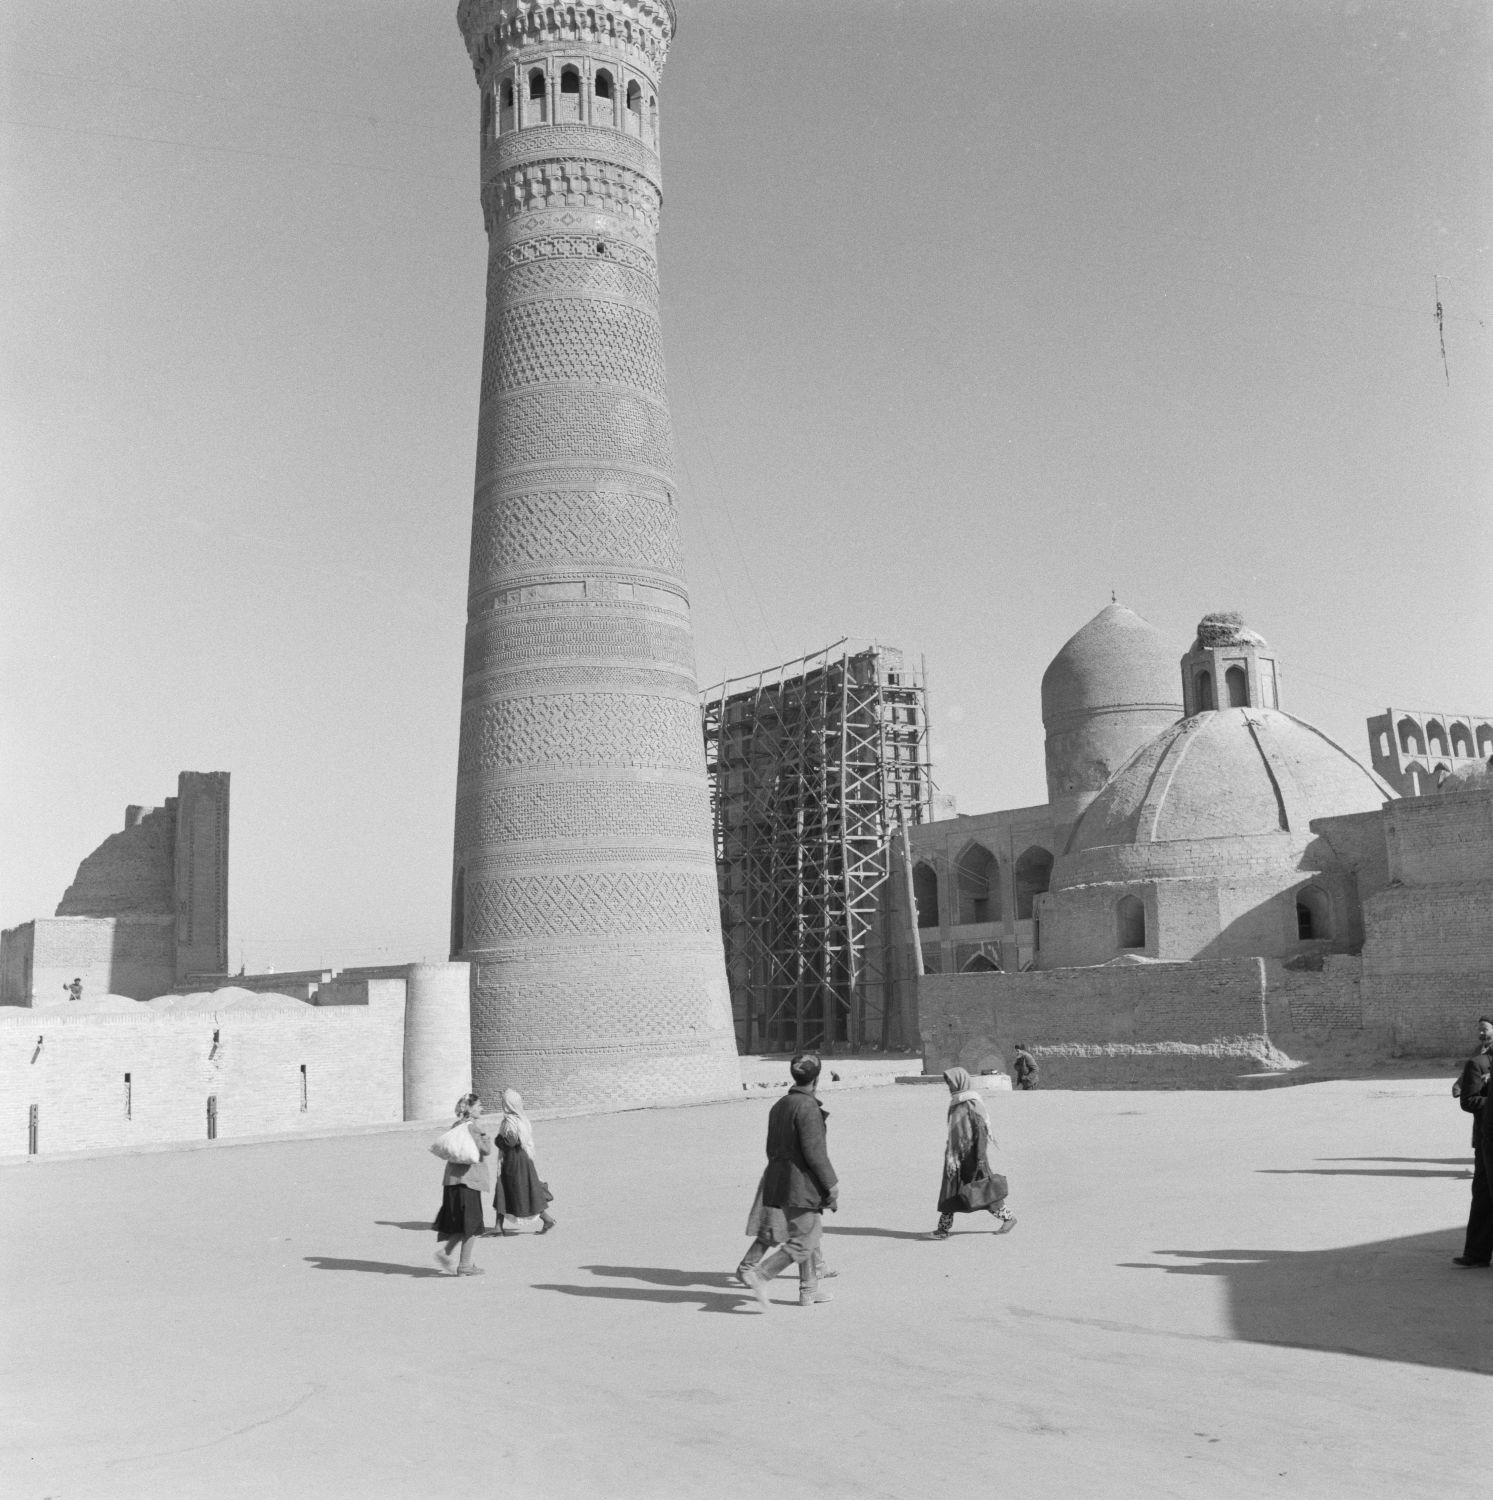 View of Kalan minaret from south.